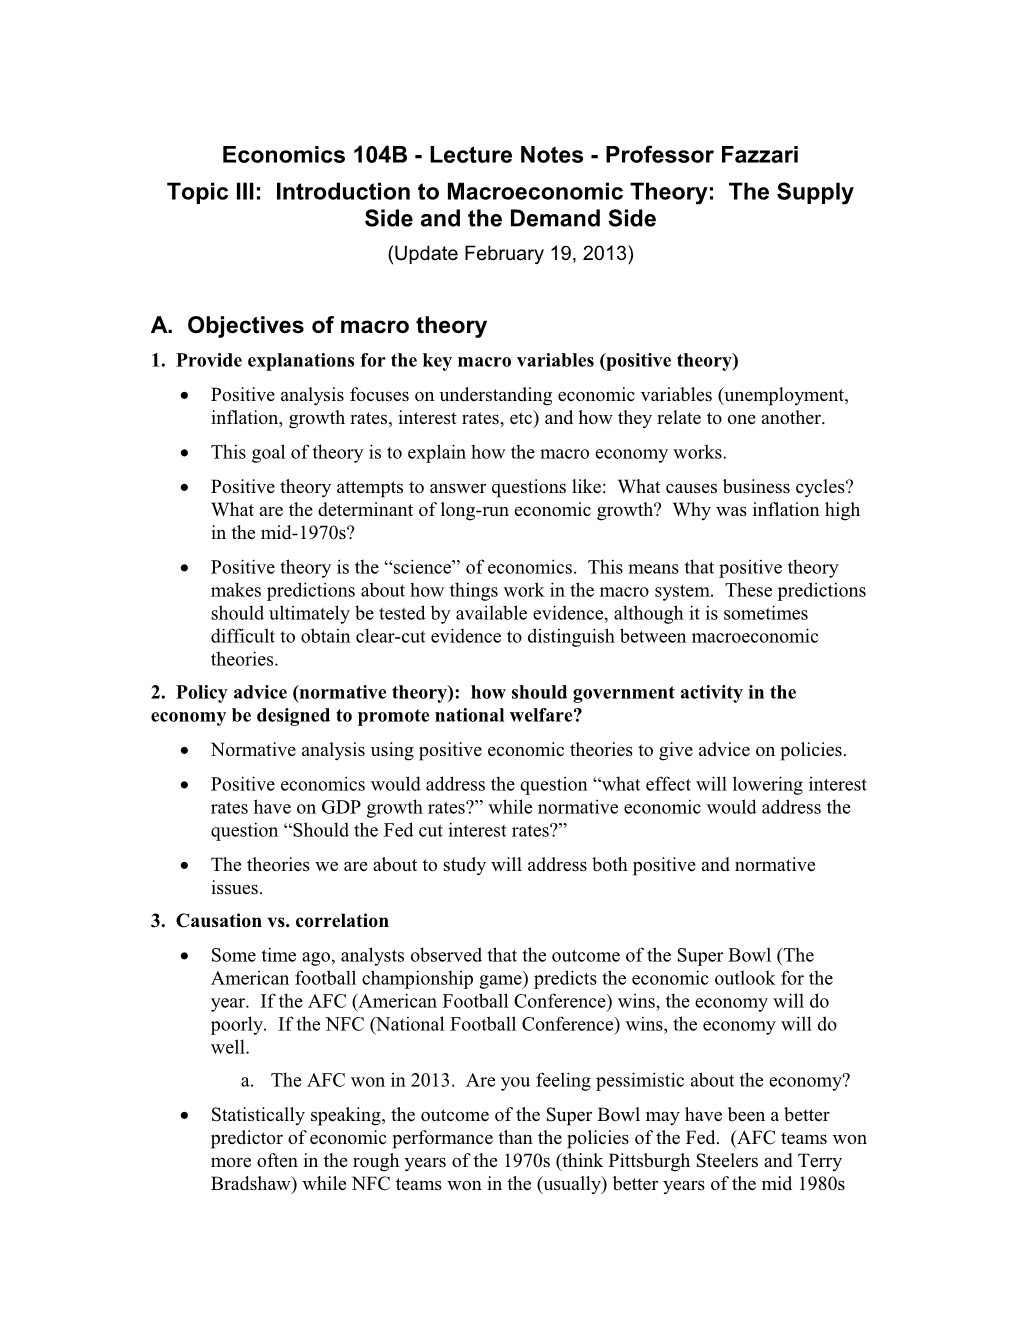 Economics 104B - Lecture Notes Part III s1